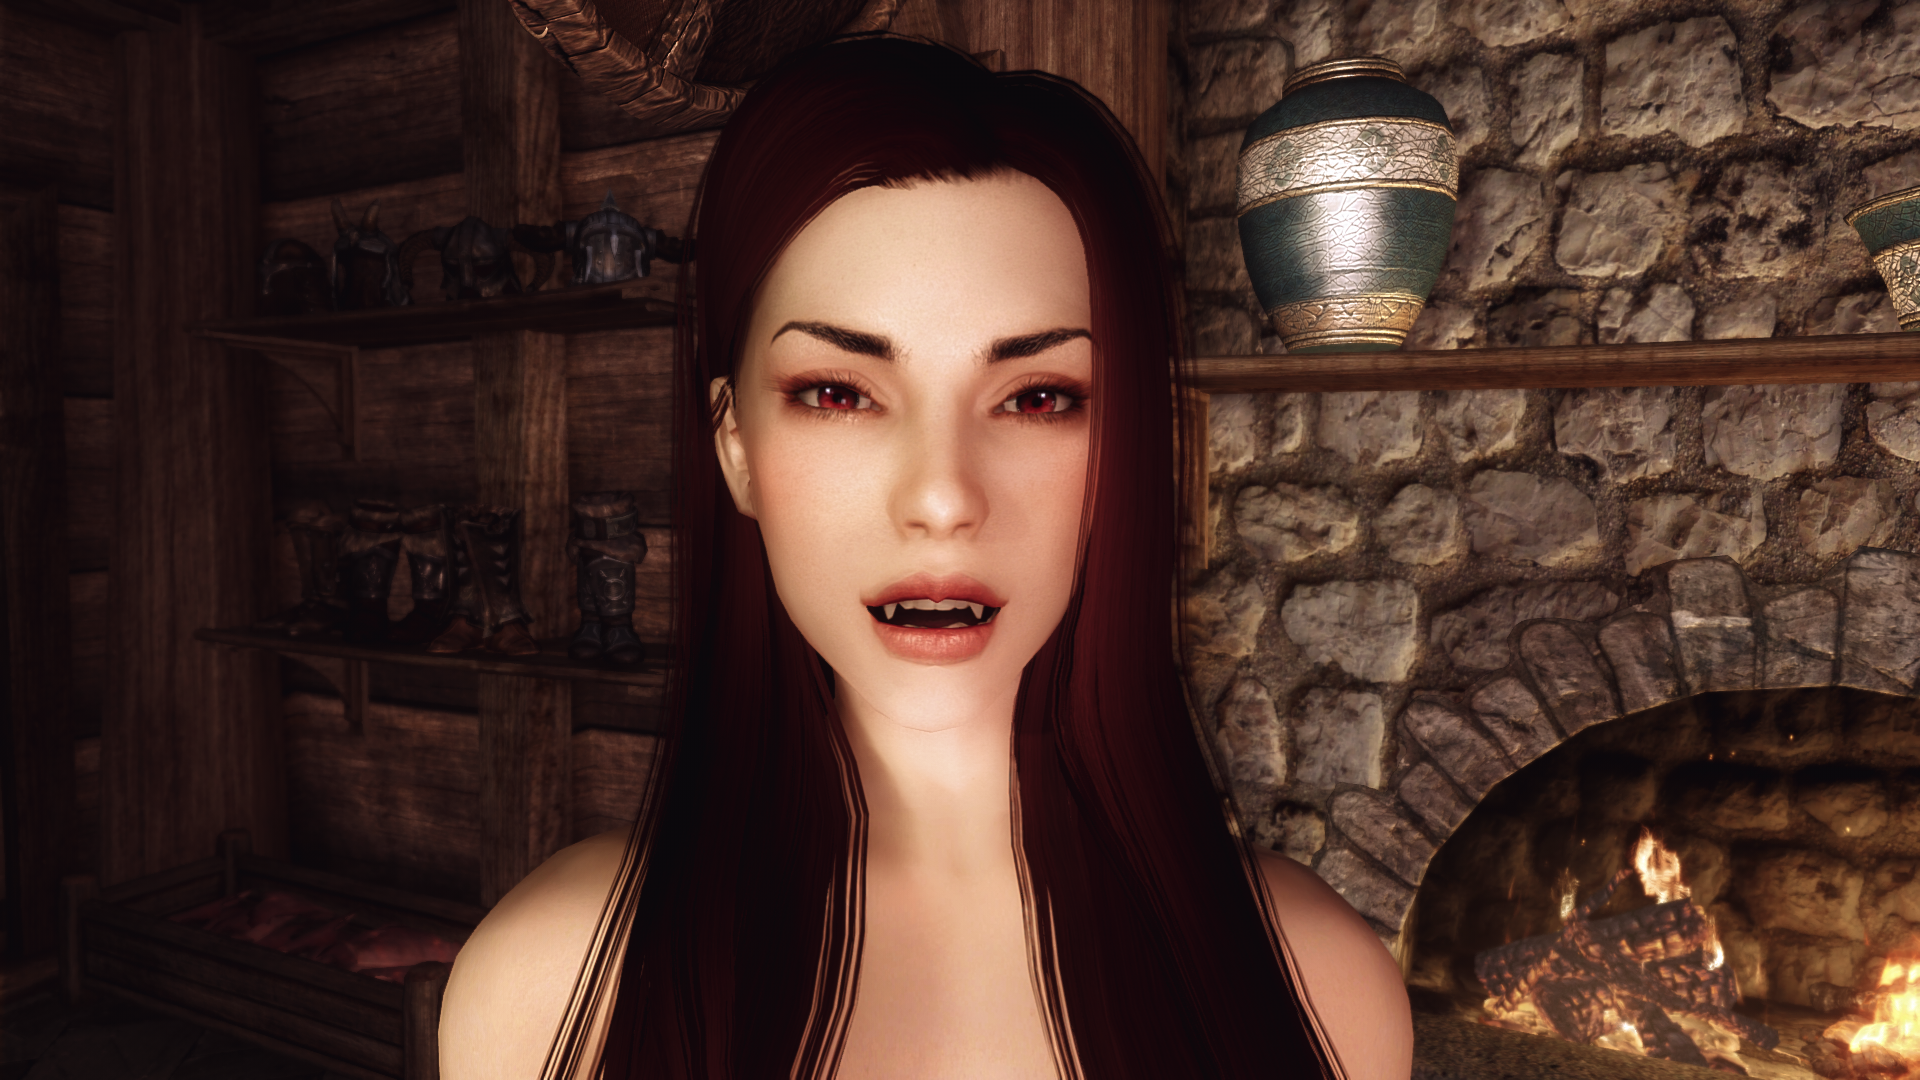 General 1920x1080 The Elder Scrolls V: Skyrim modding Serana fangs sensual gaze vampires Bethesda Softworks video games